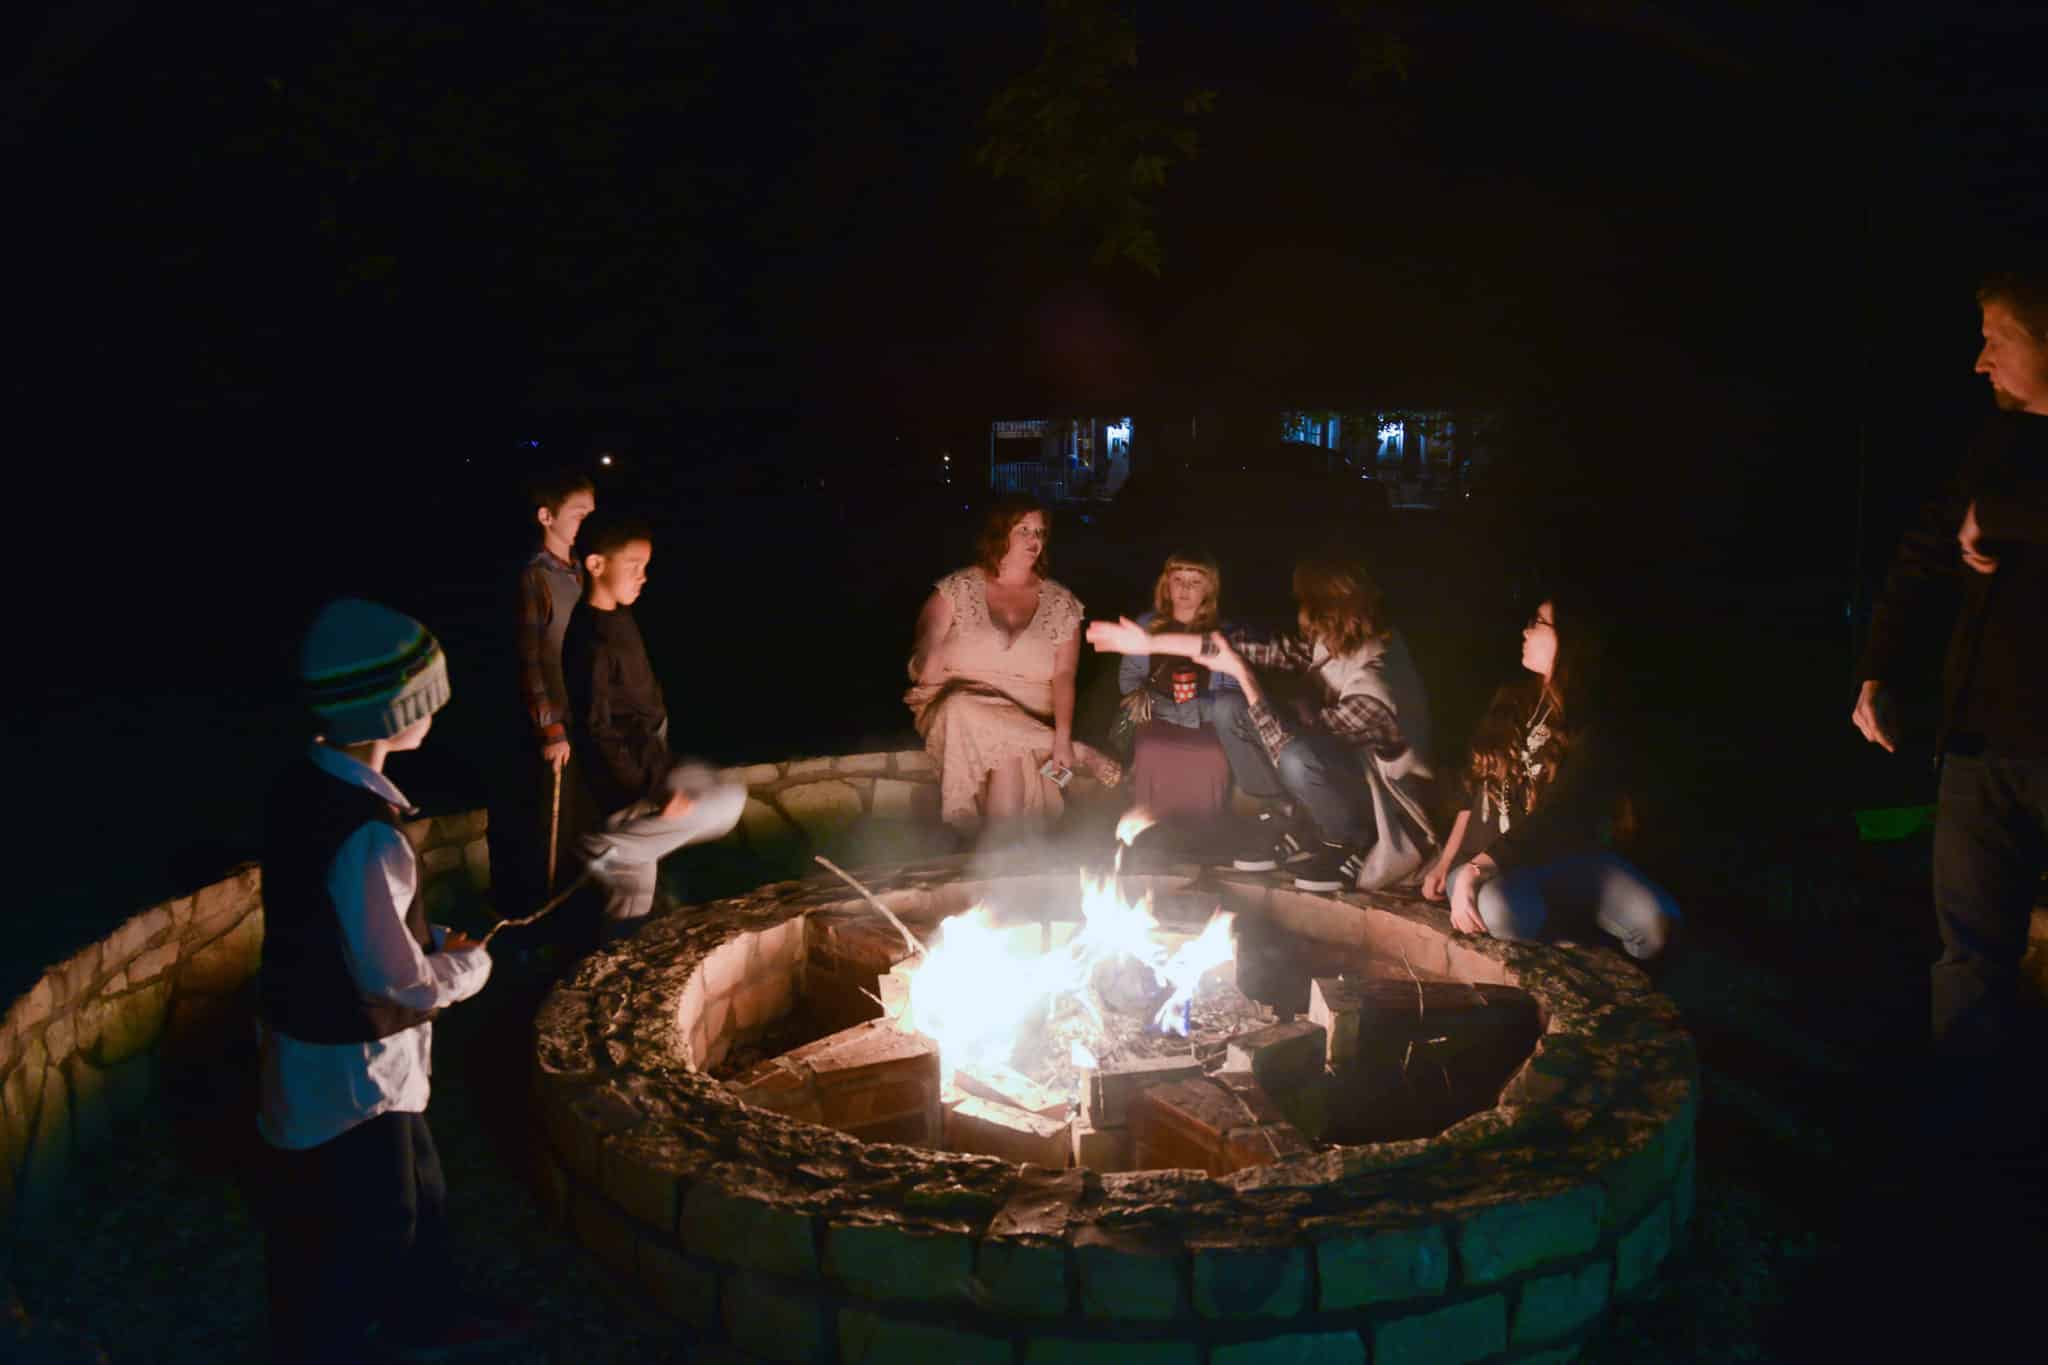 A family roasts marshmallows around a campfire at night